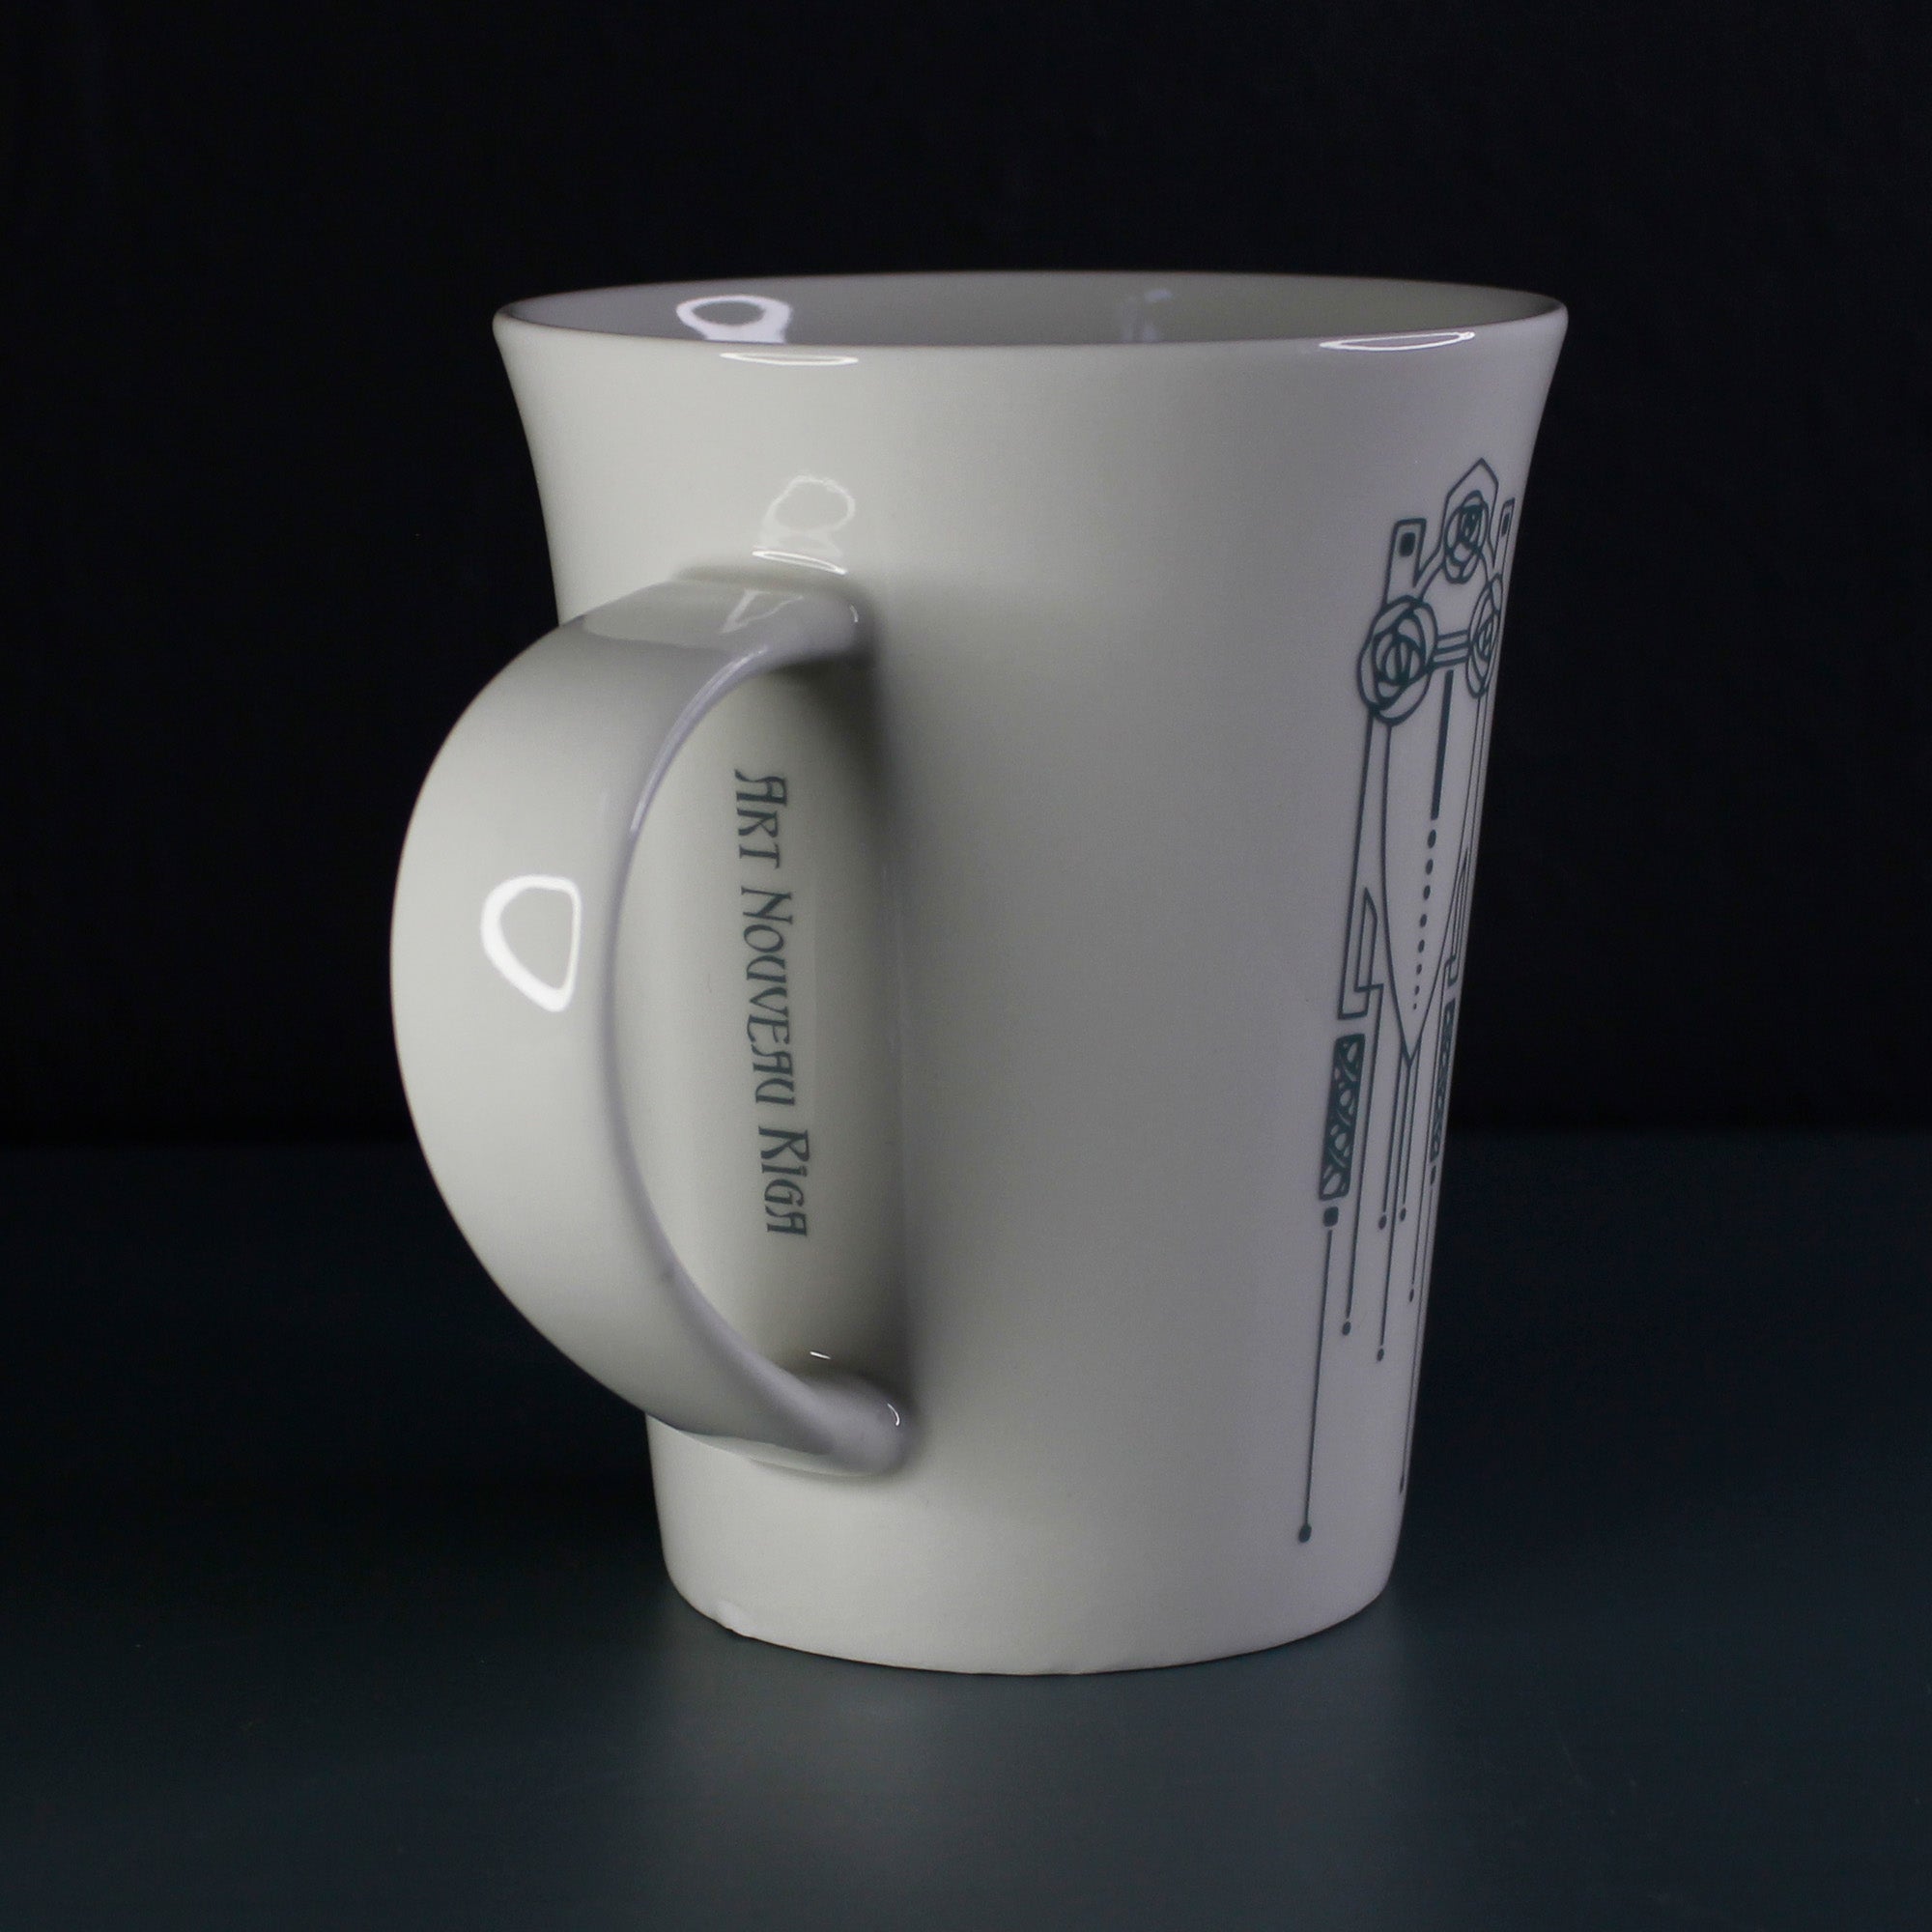 Porcelain mug - Ornament